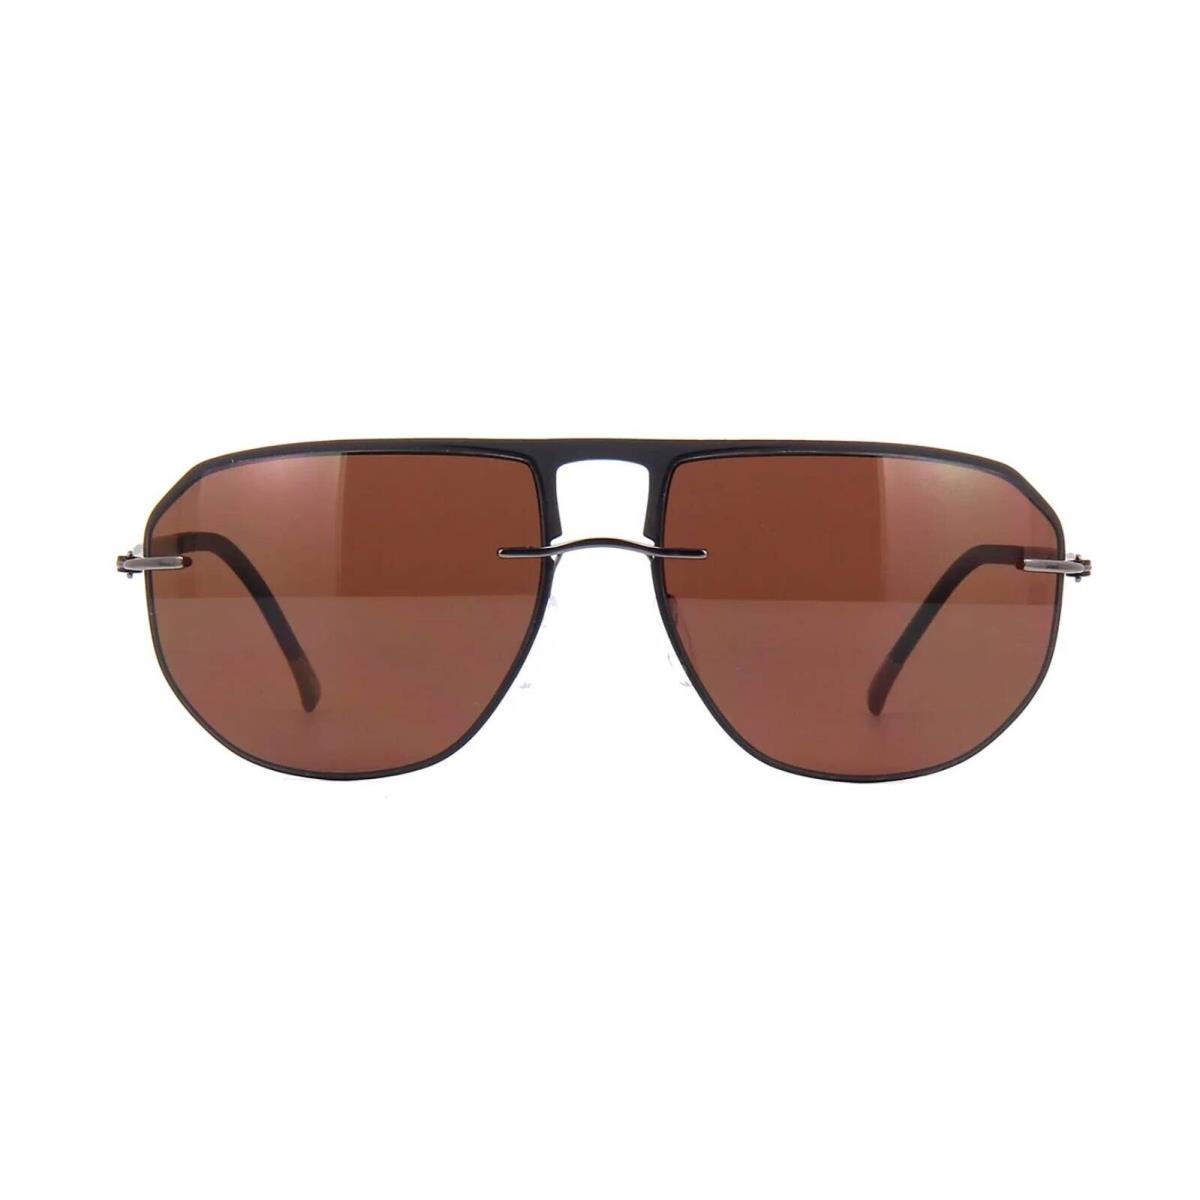 Silhouette Accent Shades 8704 Black/dark Brown Polarized 9040 D Sunglasses - Frame: Black, Lens: Dark Brown Polarized